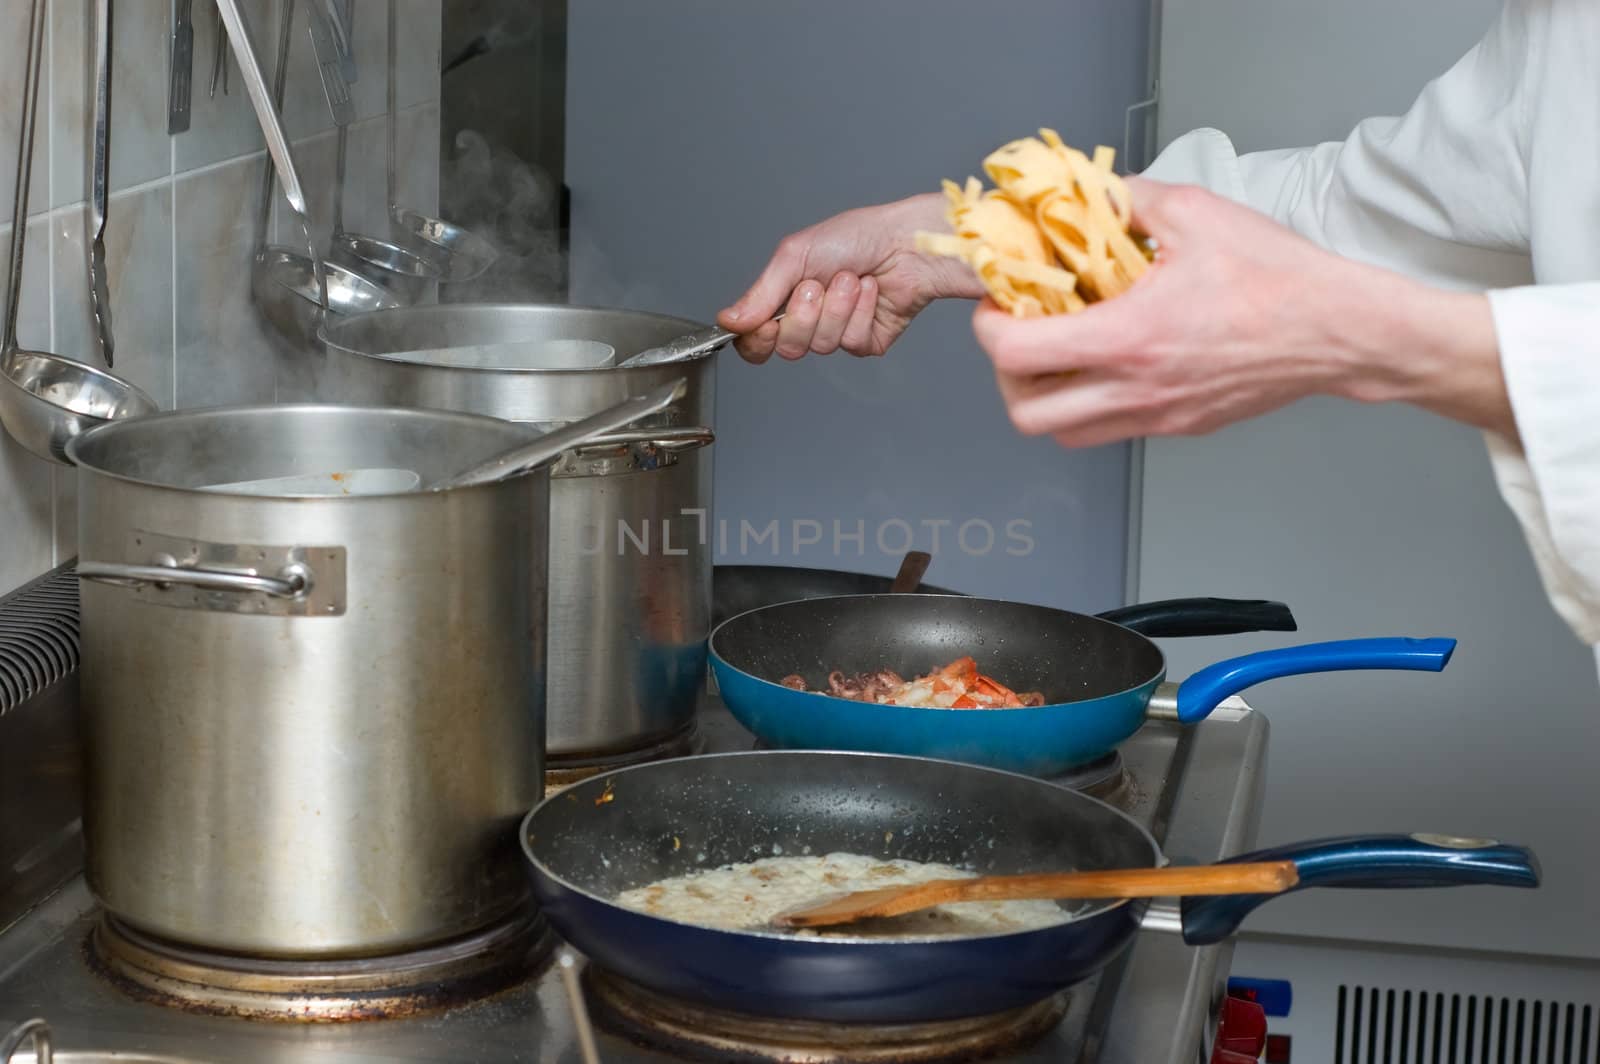 noodles and sauce preparation, interior of italian restaurant kitchen